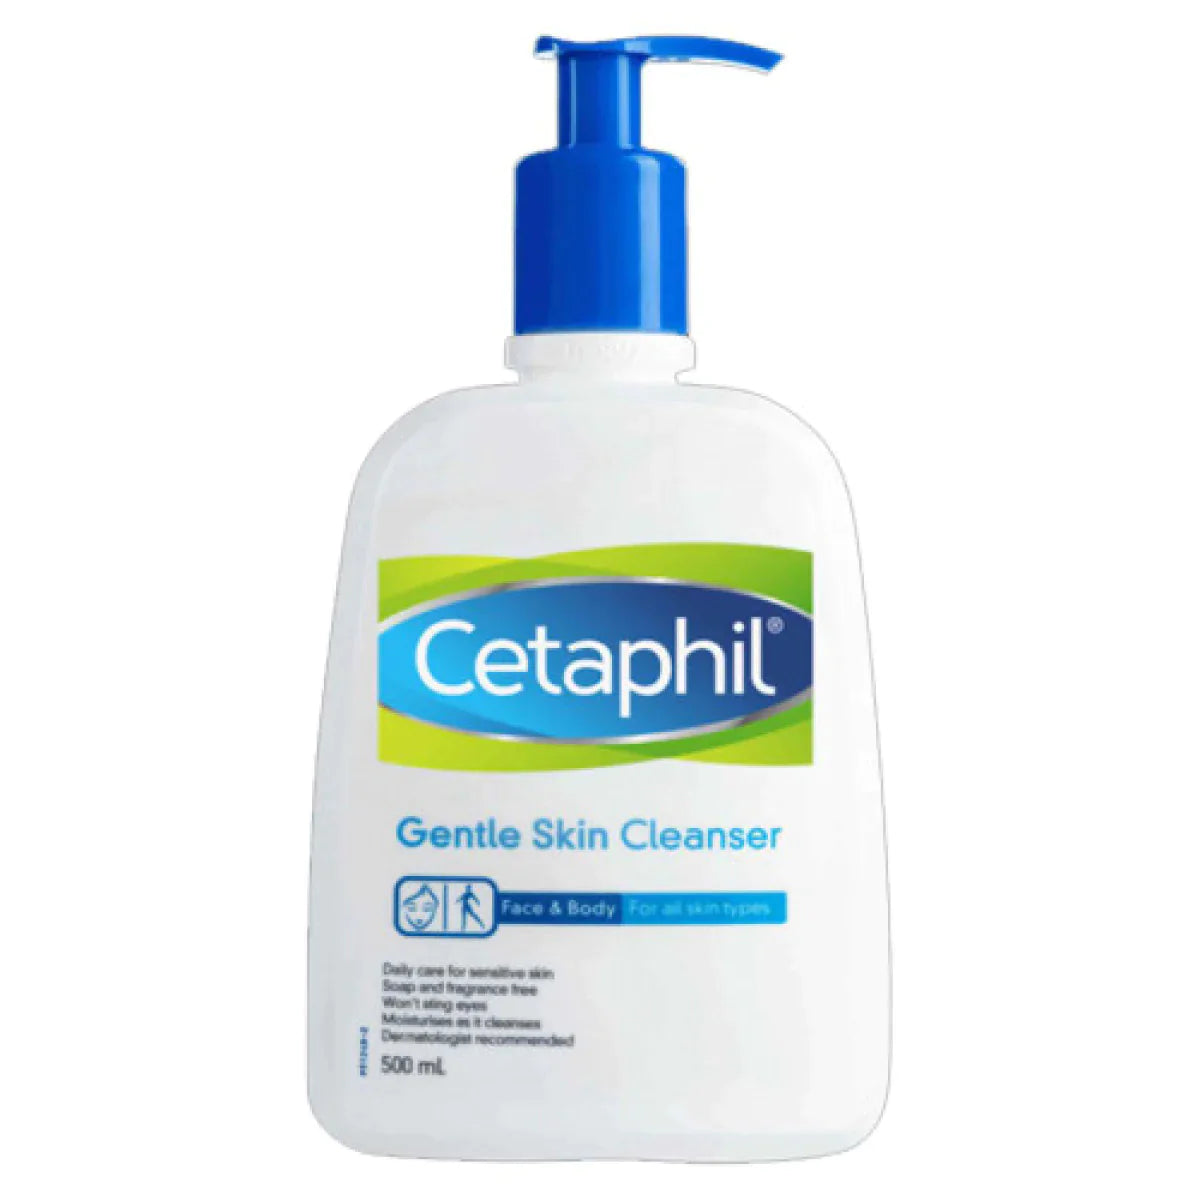 Cetaphil gentle skin cleanser 500ml - Buy Now Pakistan